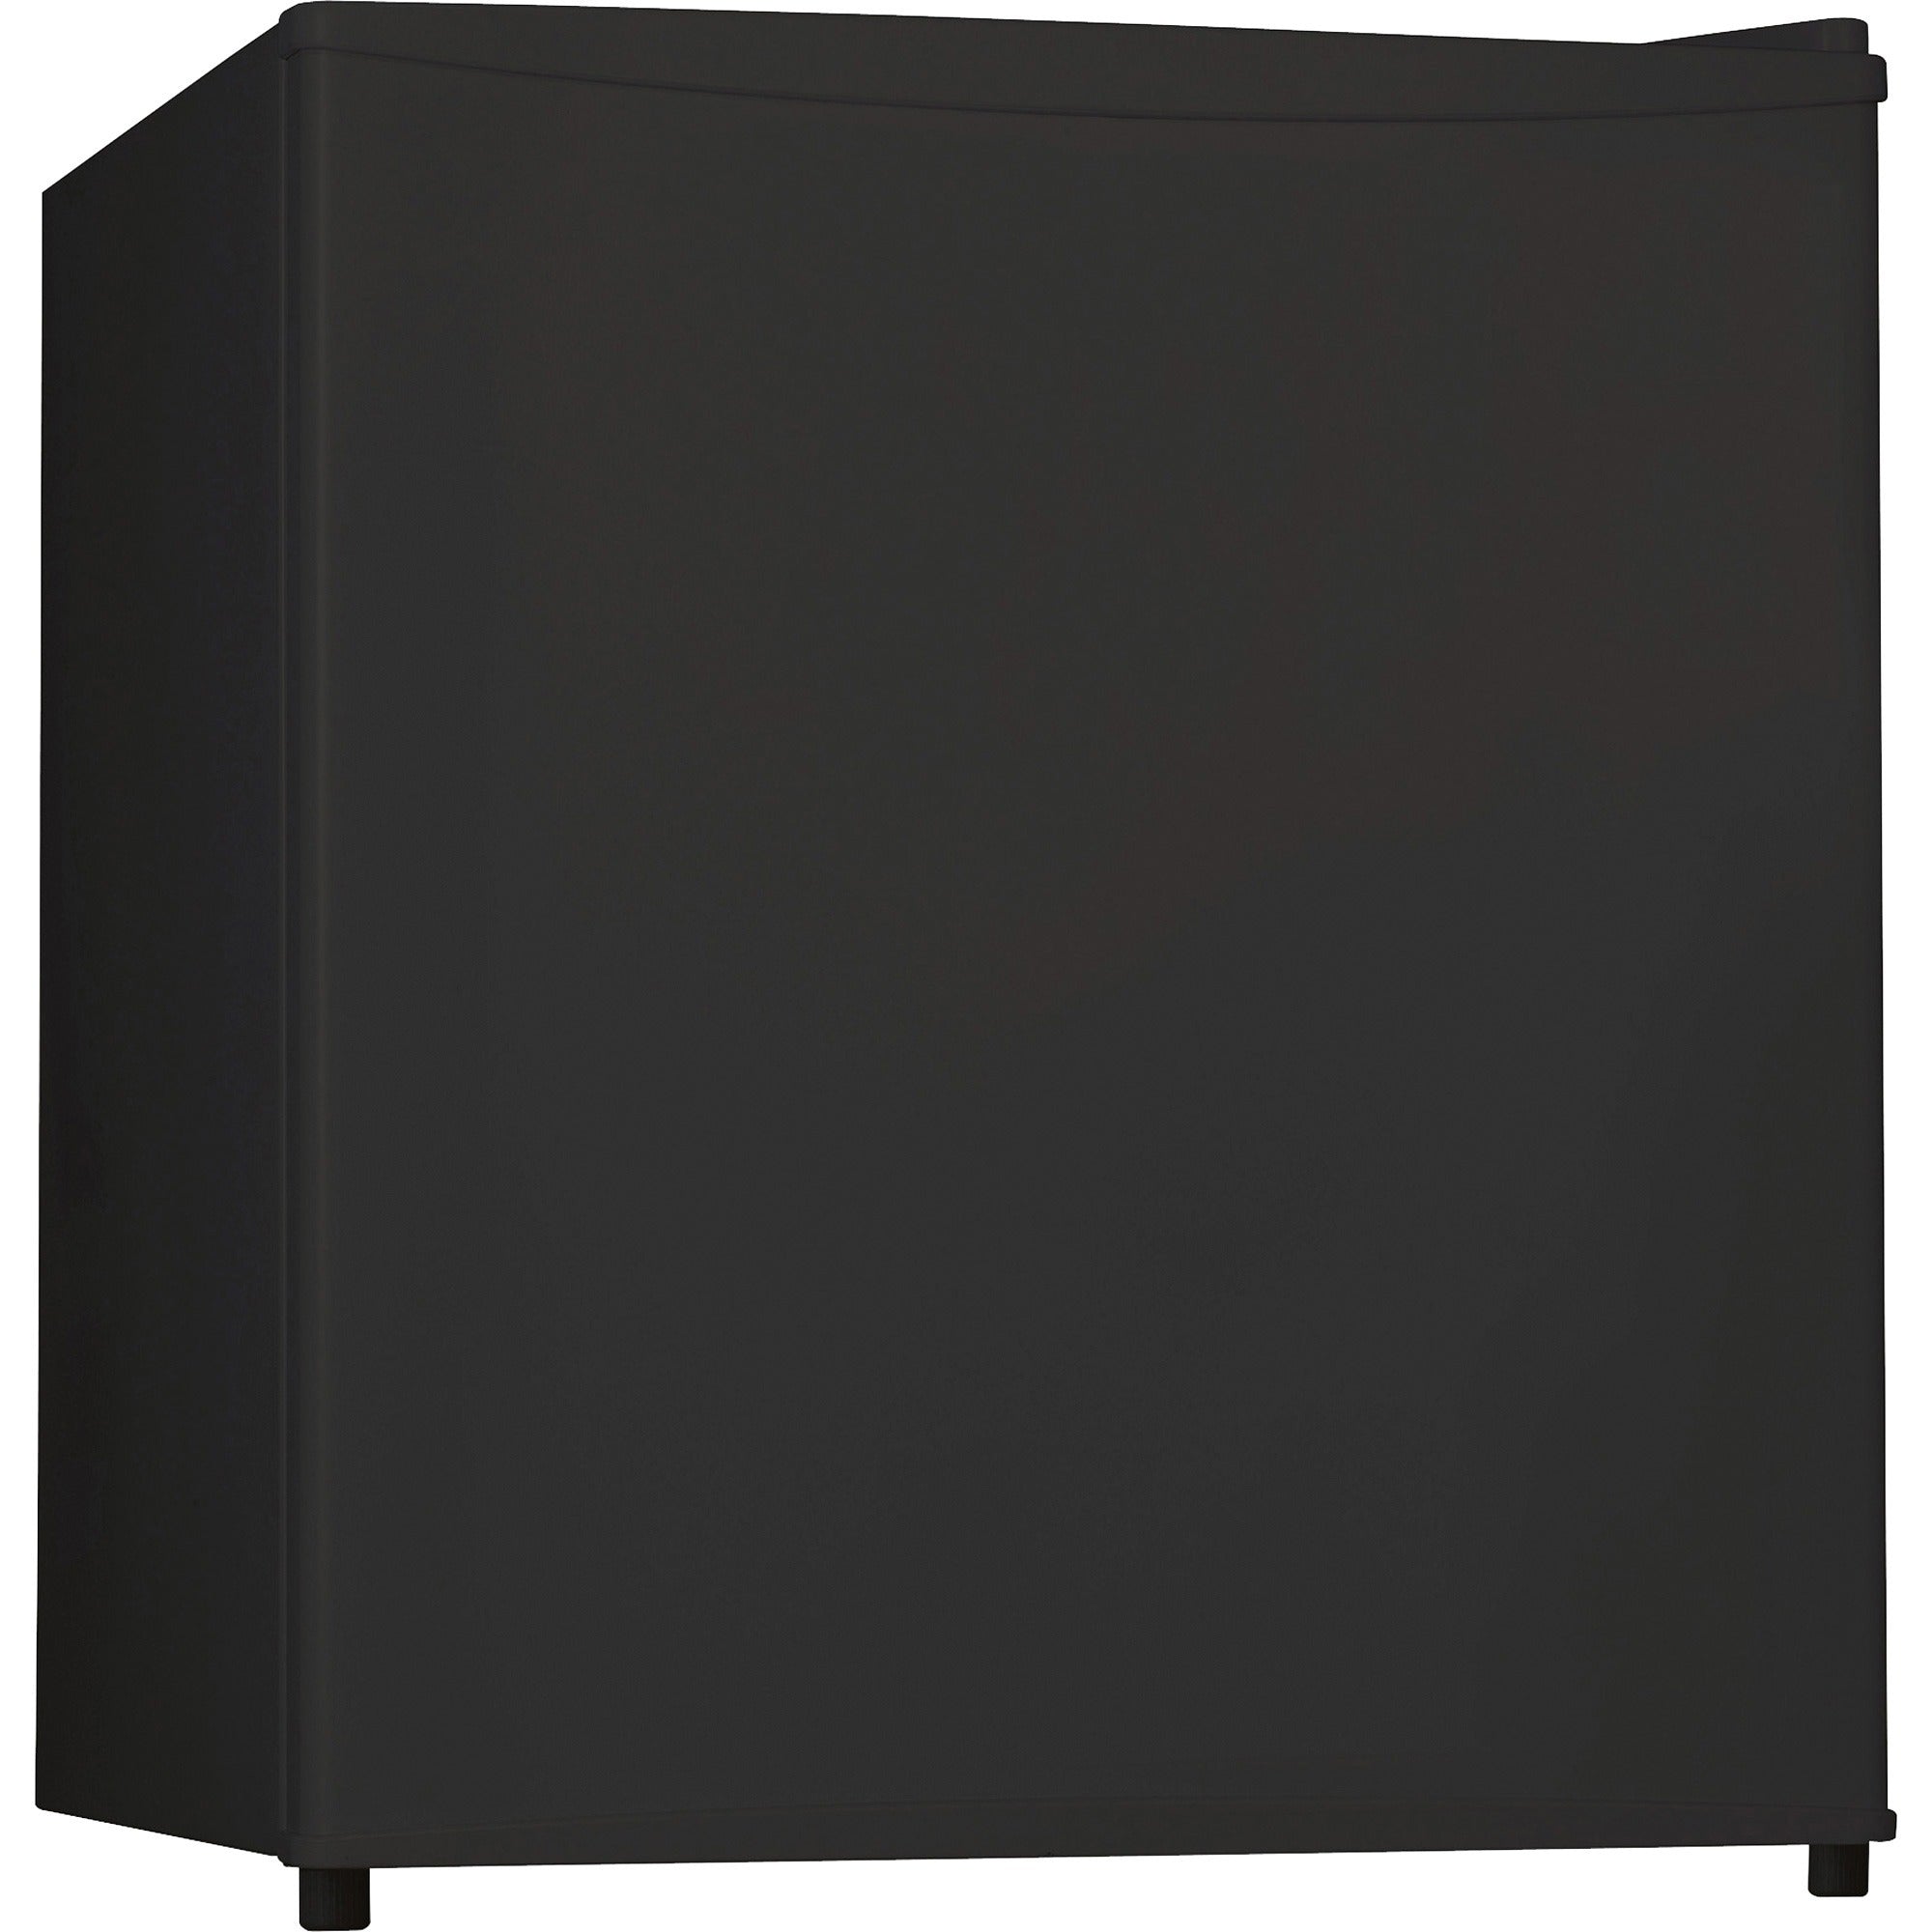 Lorell Compact Refrigerator - 1.60 ft - Manual Defrost - Manual Defrost - Reversible - 1.60 ft Net Refrigerator Capacity - Black - Steel, Fiberglass, Plastic - 